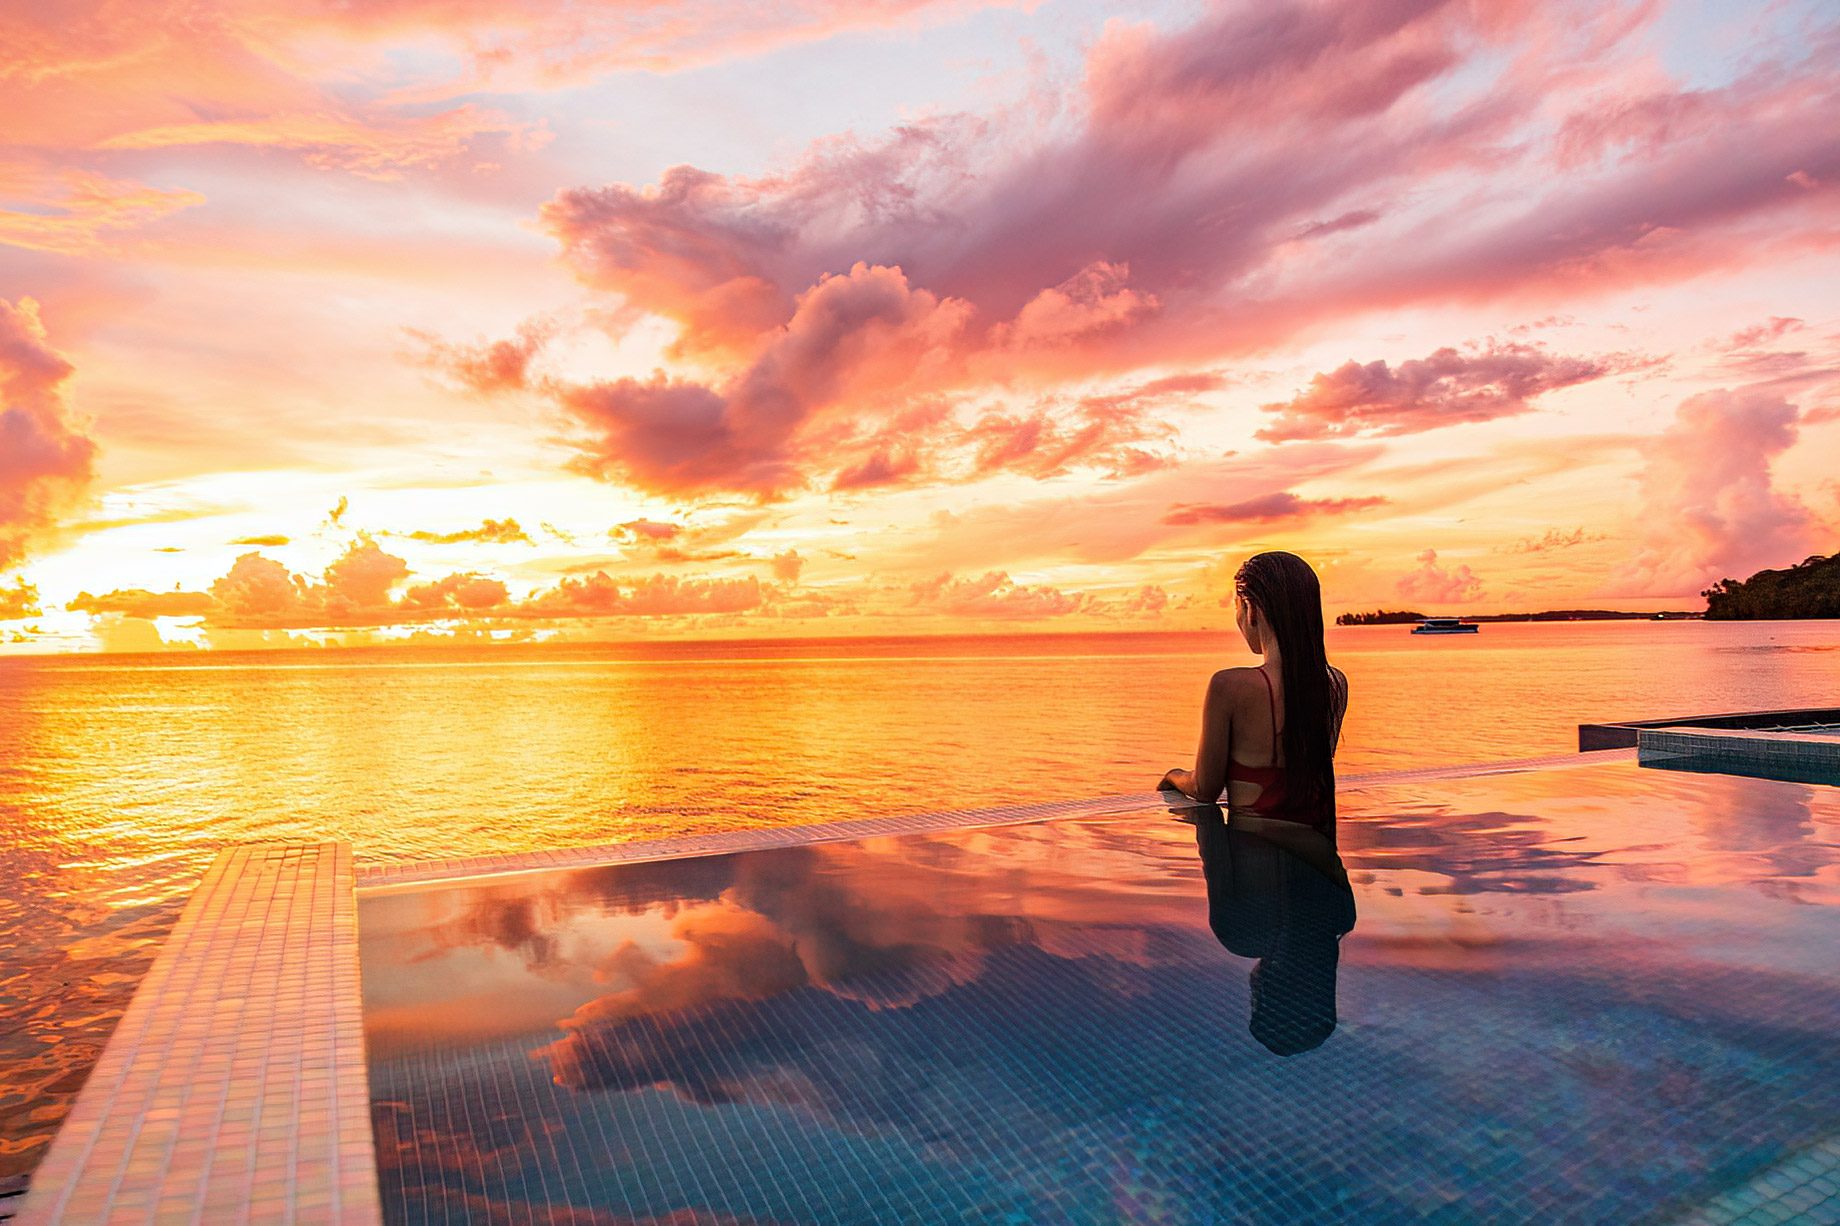 Women at the Edge of an Infinity Pool - Sunset in Bora Bora, French Polynesia